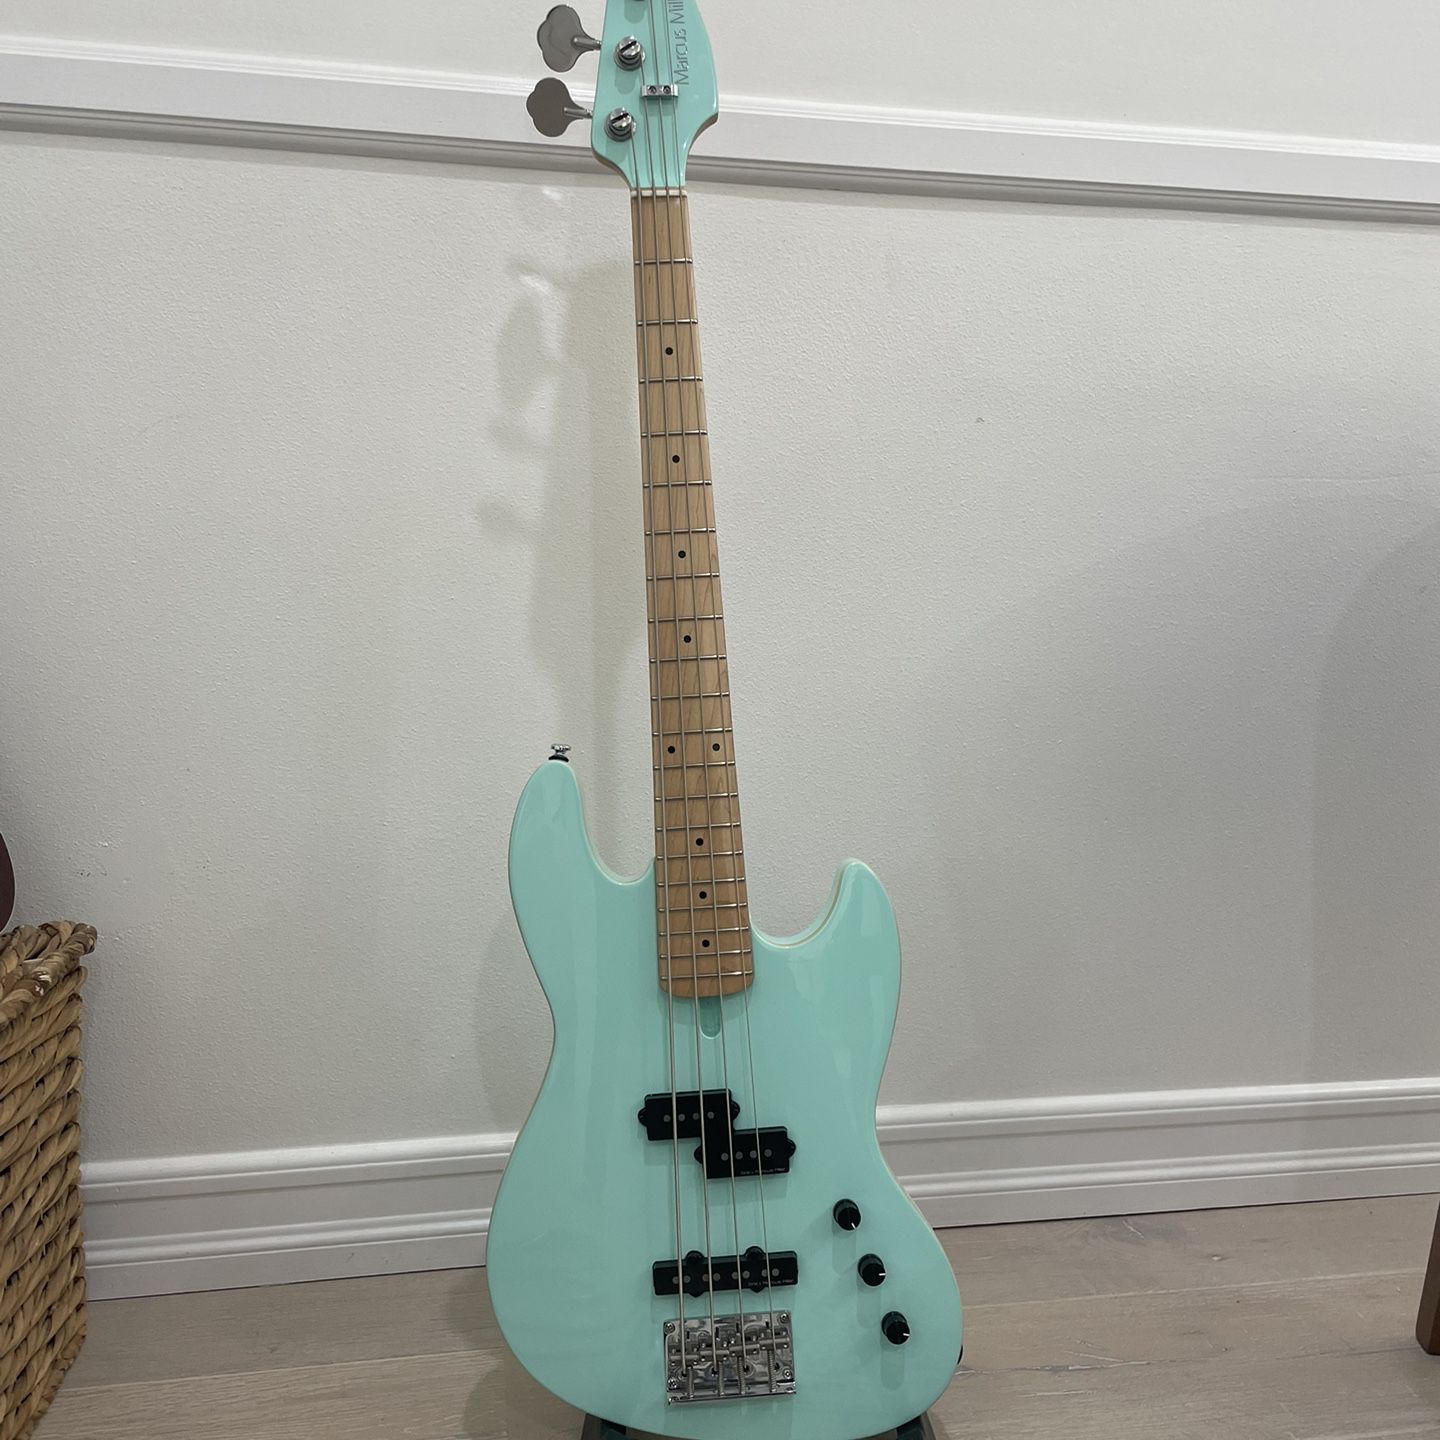 Sire U5 Short-Scale Bass guitar - excellent condition